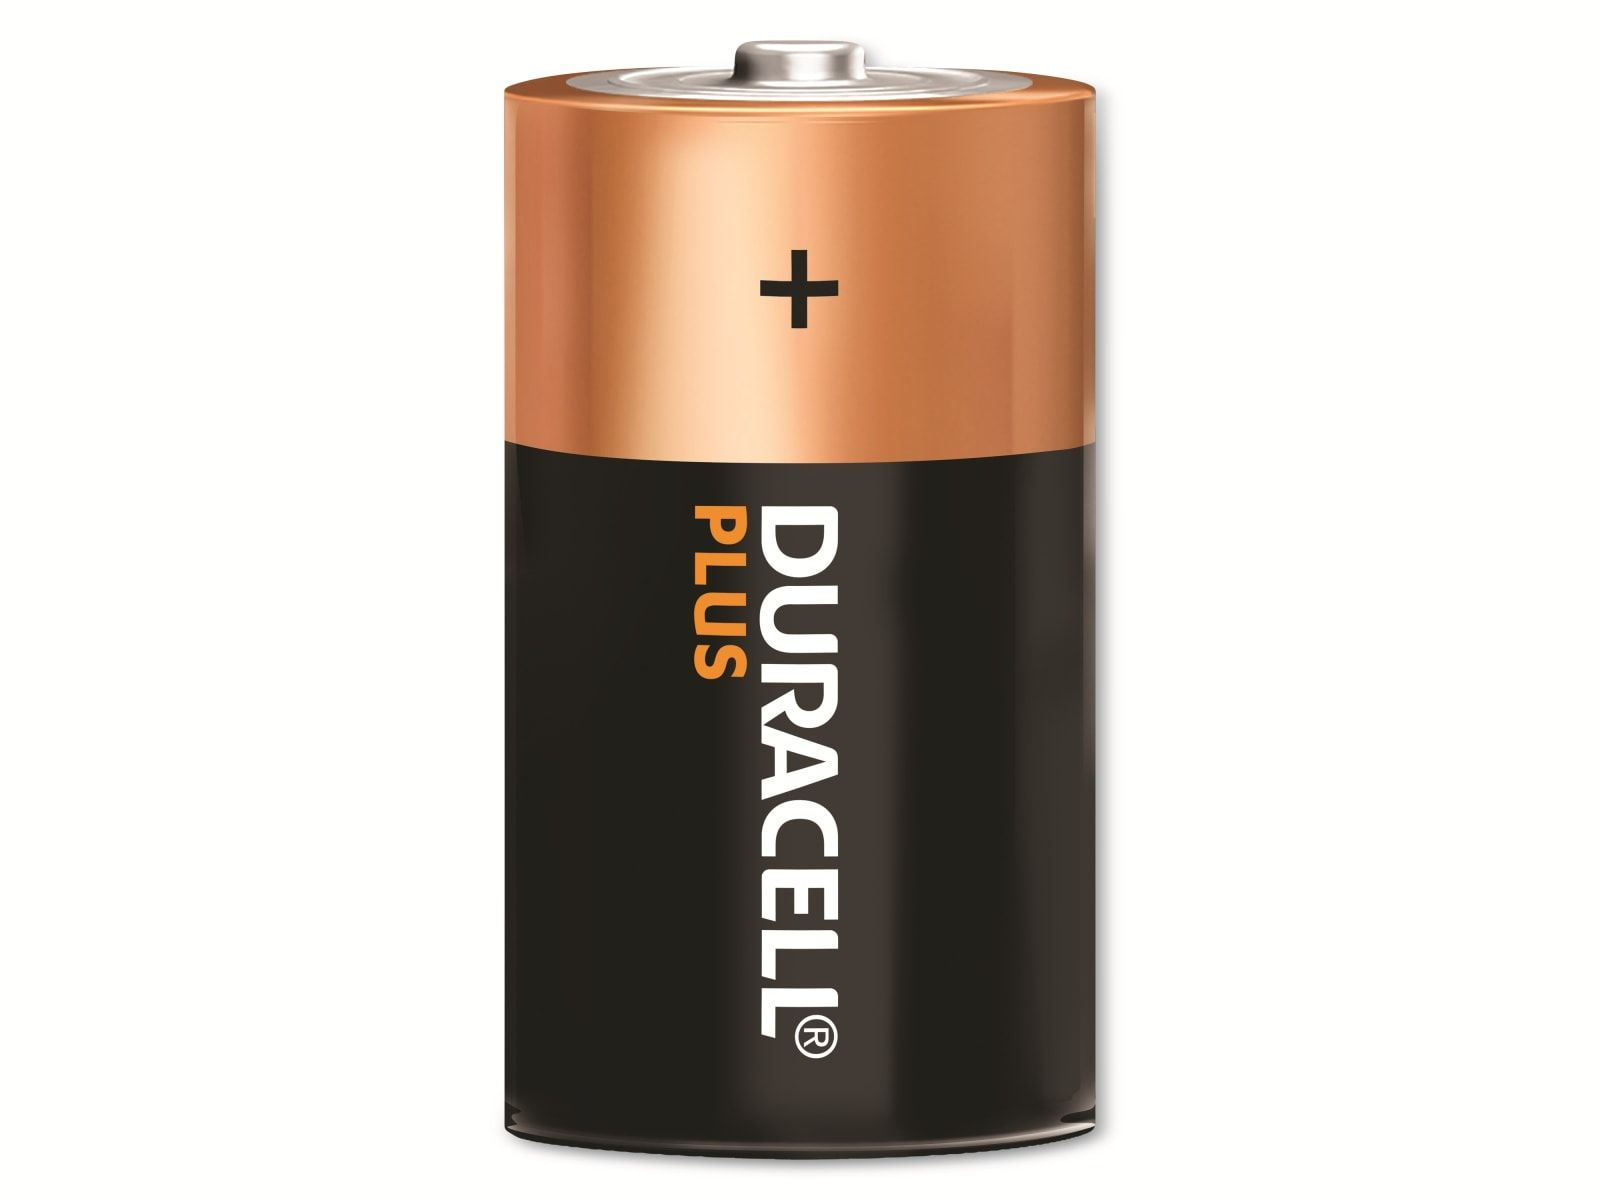 DURACELL Alkaline LR20, Alkaline-Mono-Batterie Plus, 4 Batterie Stück 1.5V,